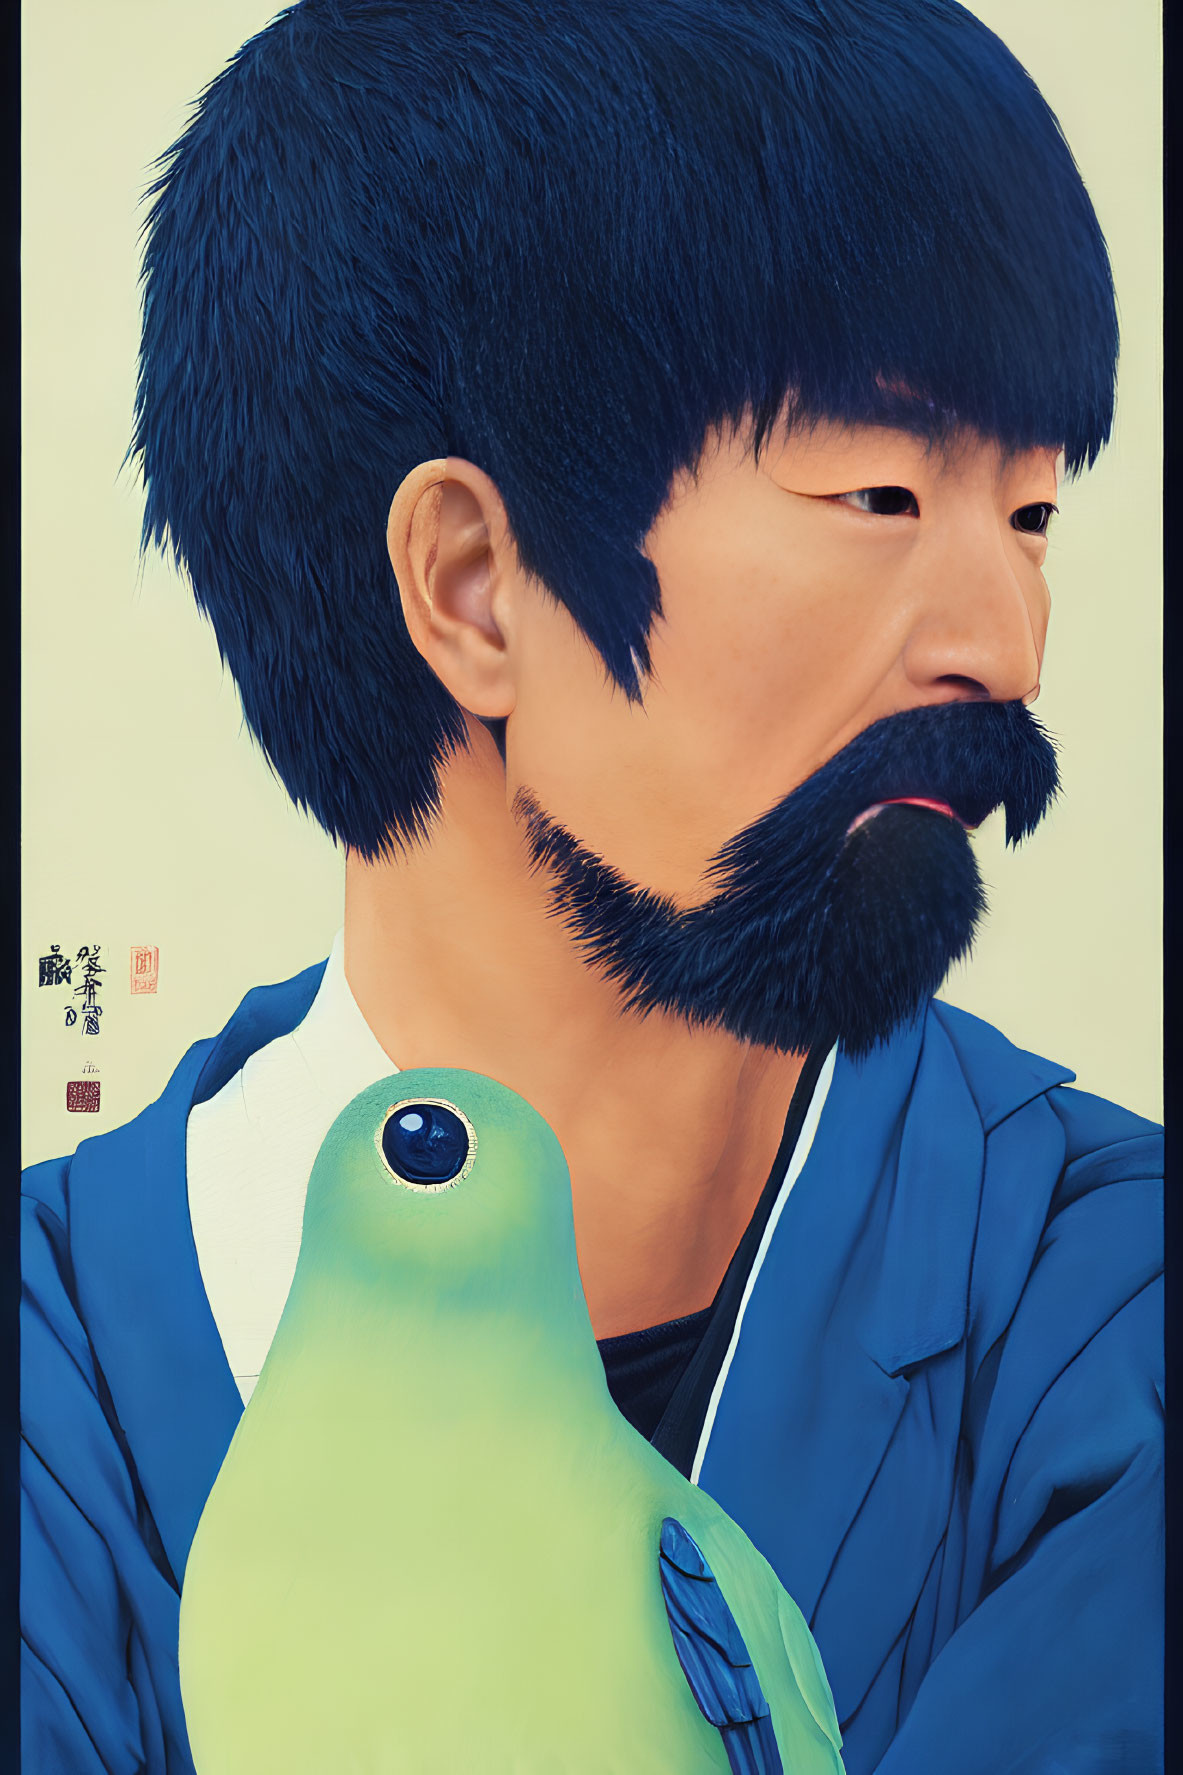 Man with Black Beard Holding Green Bird in Digital Illustration